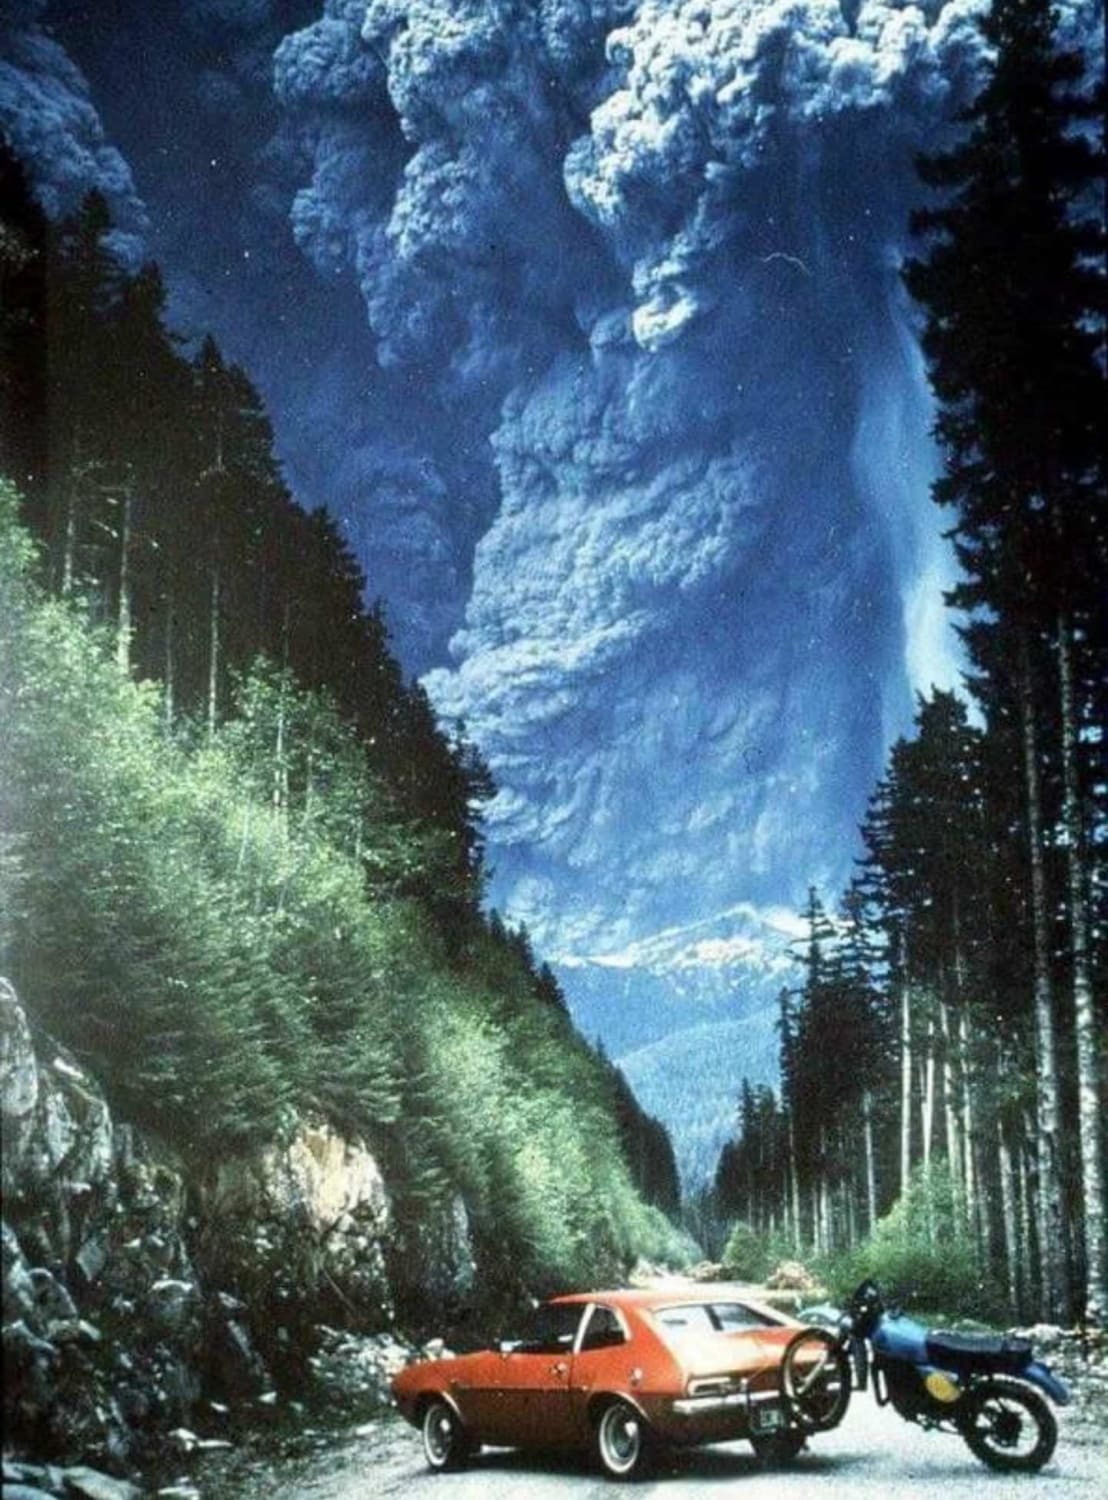 An Alternate Angle of the 1980 Mount Saint Hellen’s Eruption.